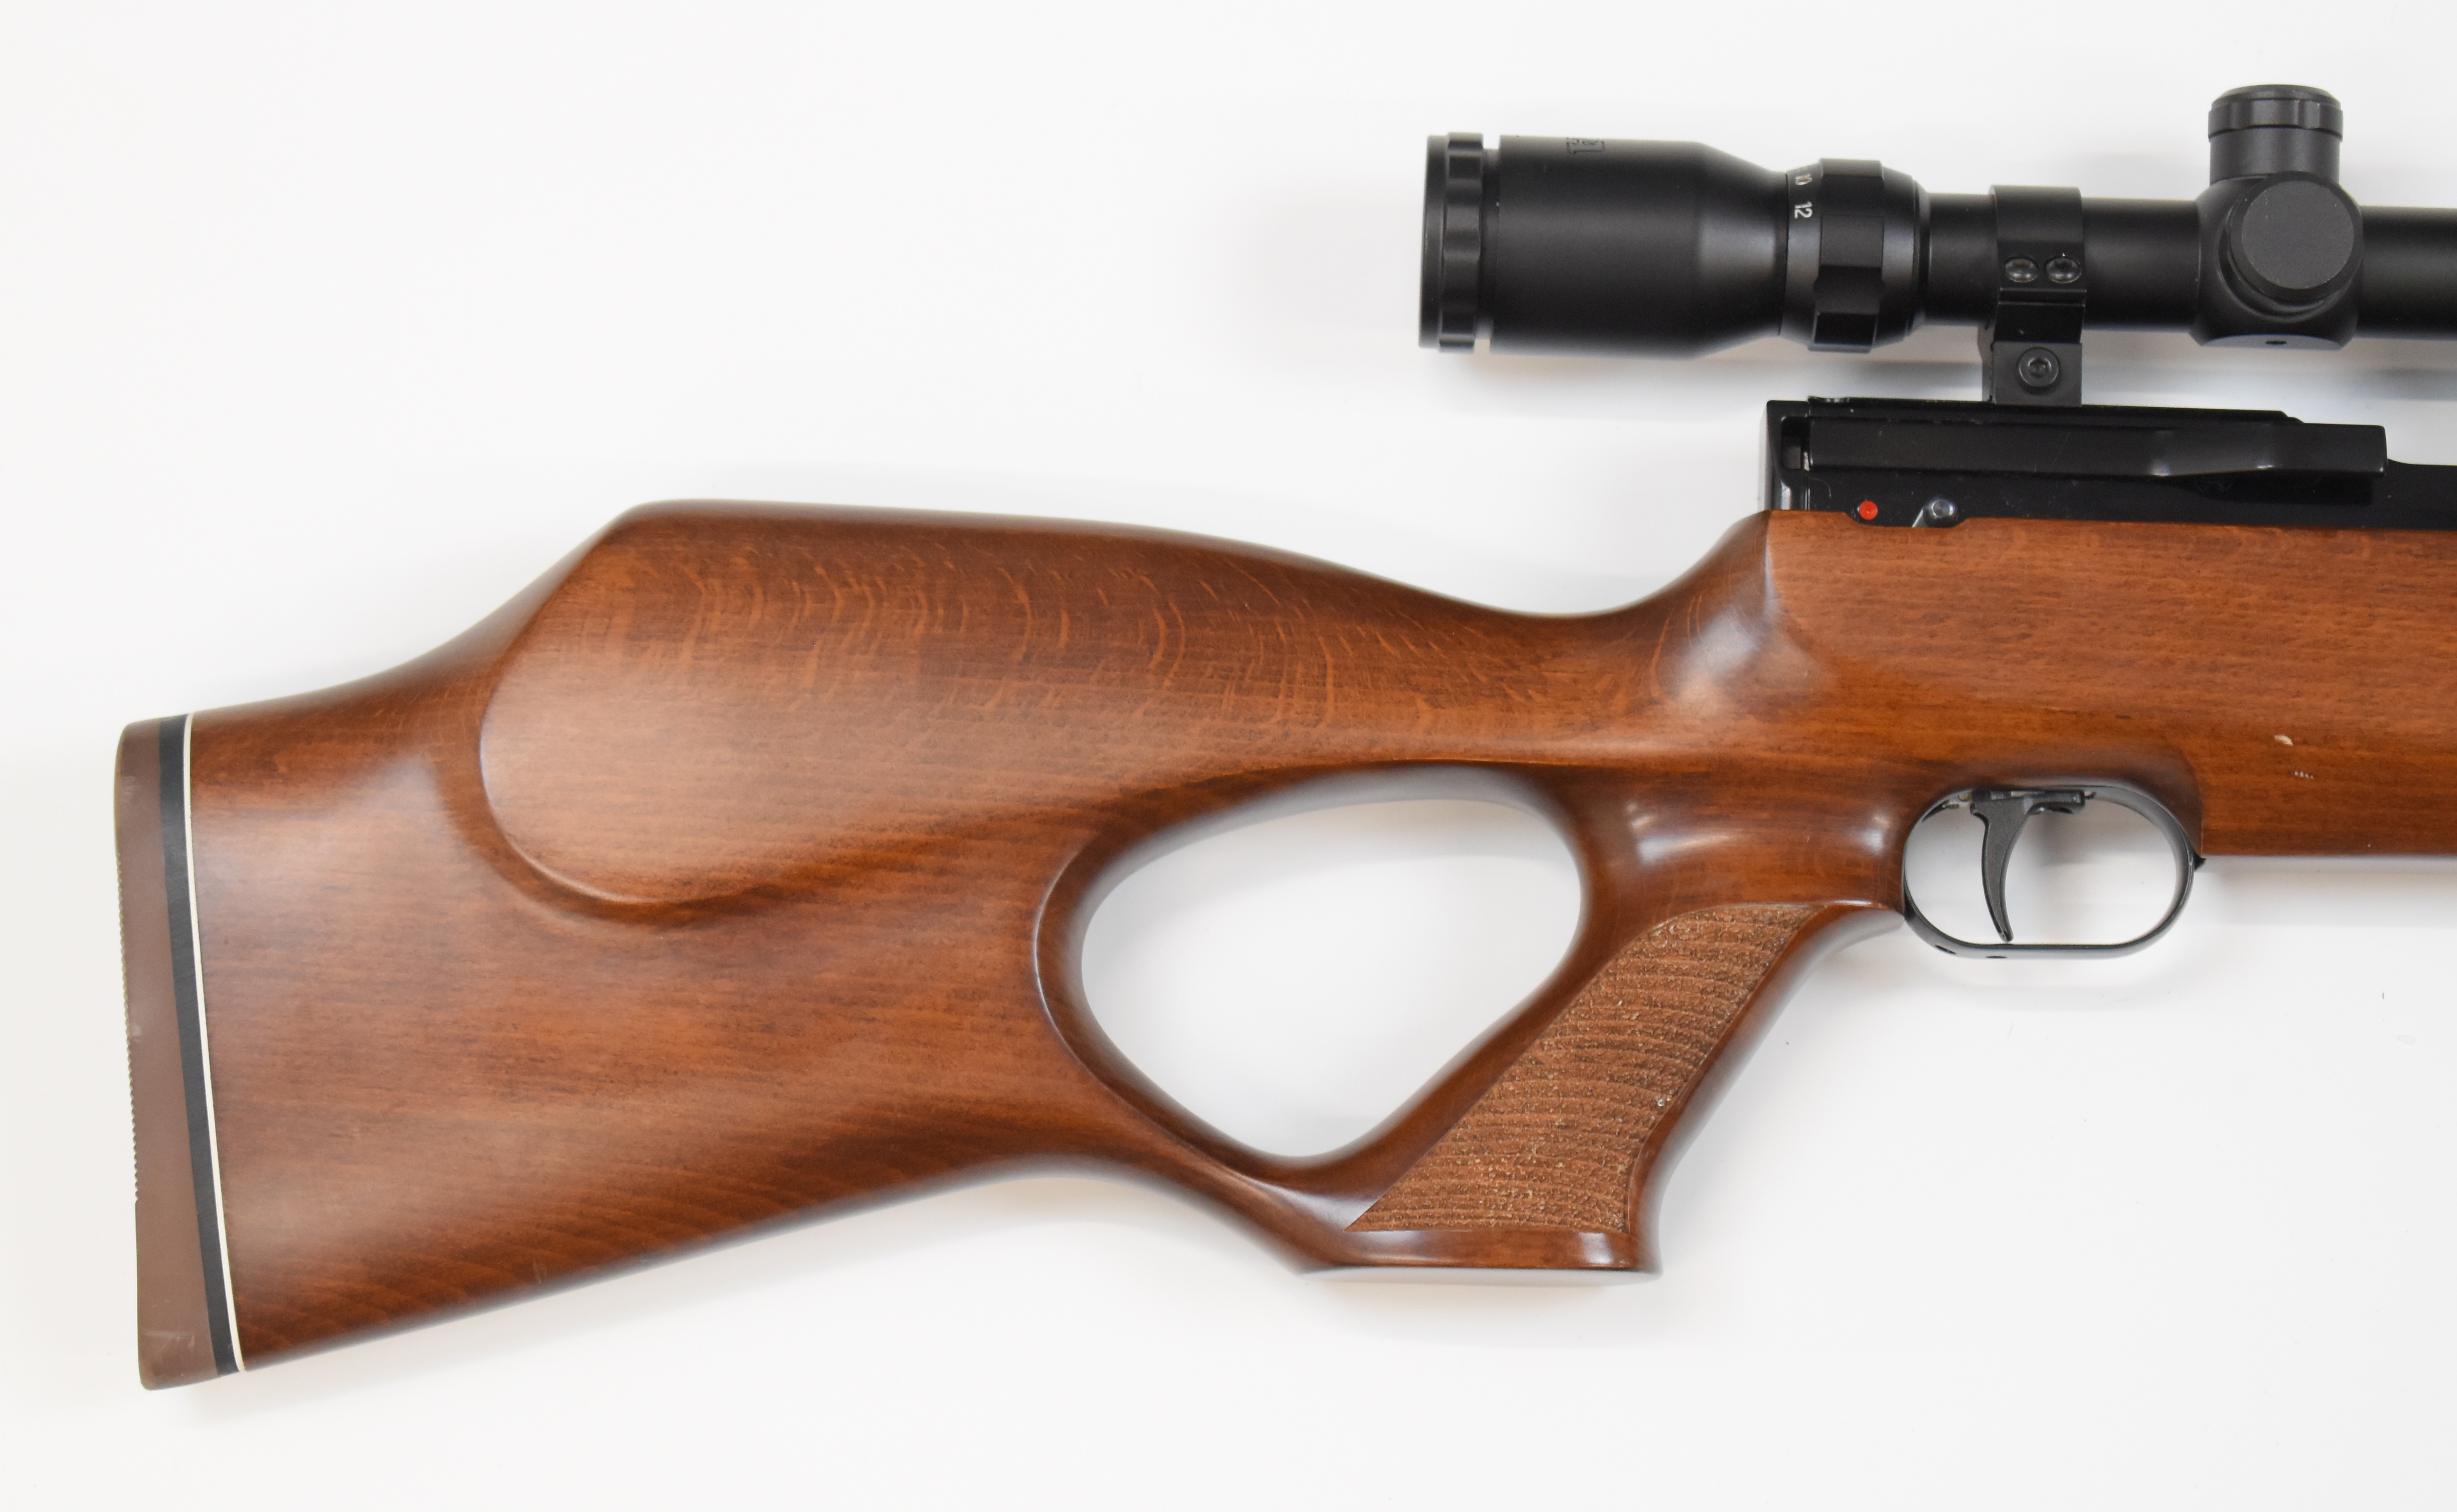 Weihrauch HW101 .177 PCP air rifle with textured semi-pistol grip, raised cheek piece, adjustable - Image 3 of 10